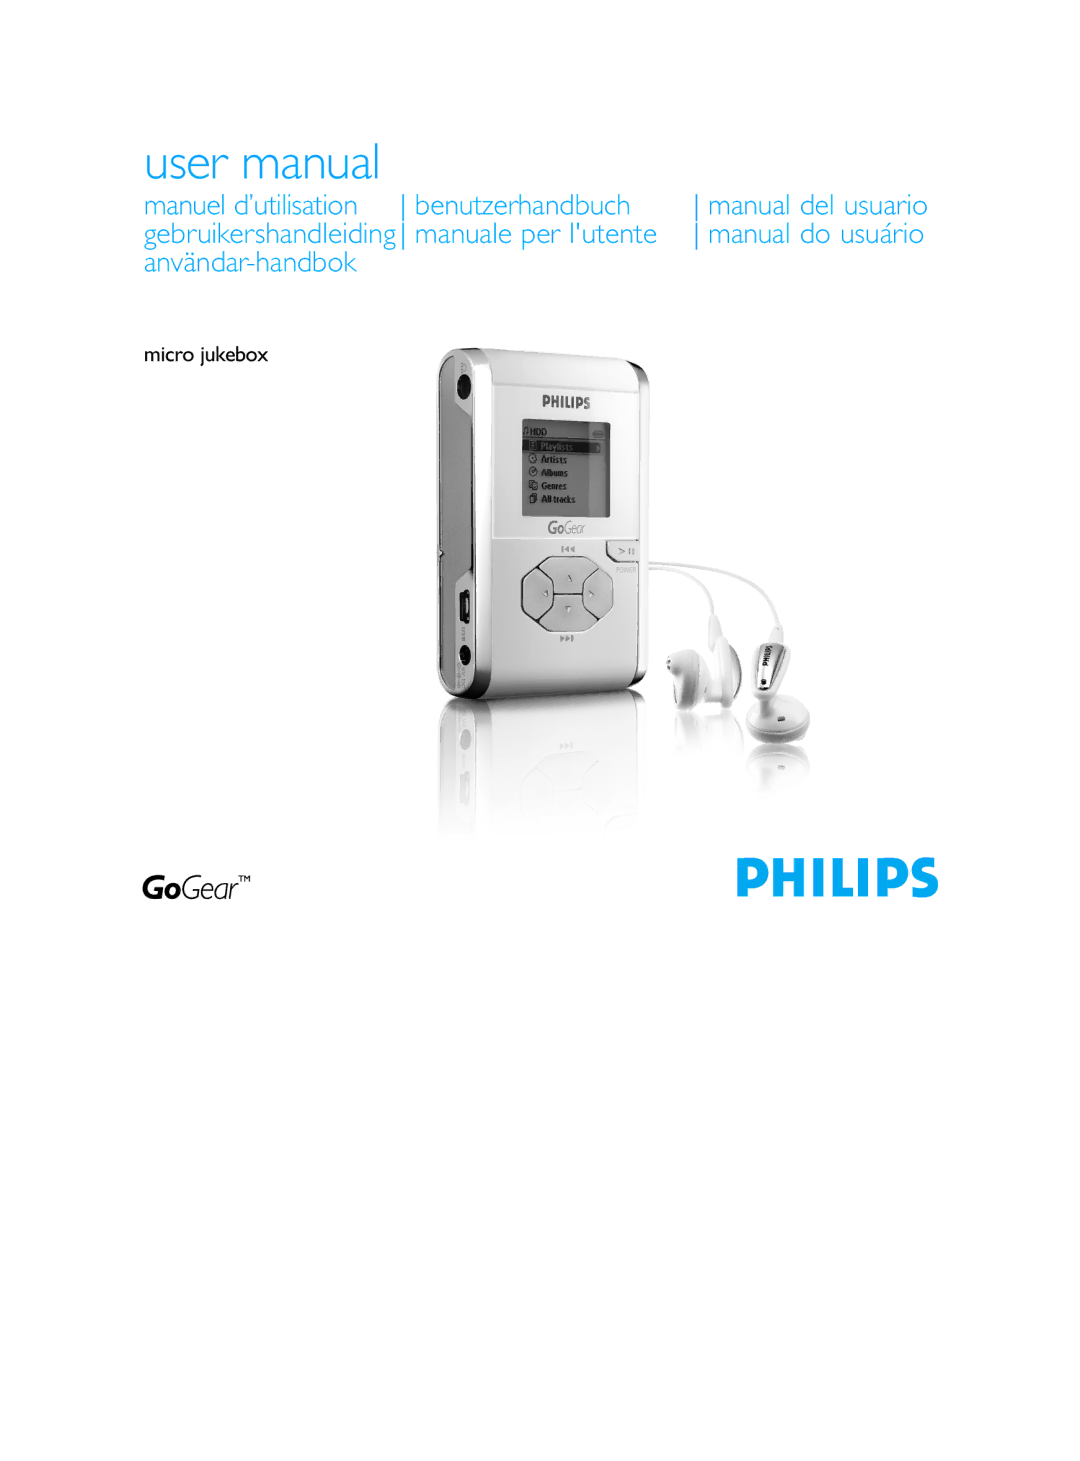 Philips Micro Jukebox user manual Manuel d’utilisation Benutzerhandbuch 